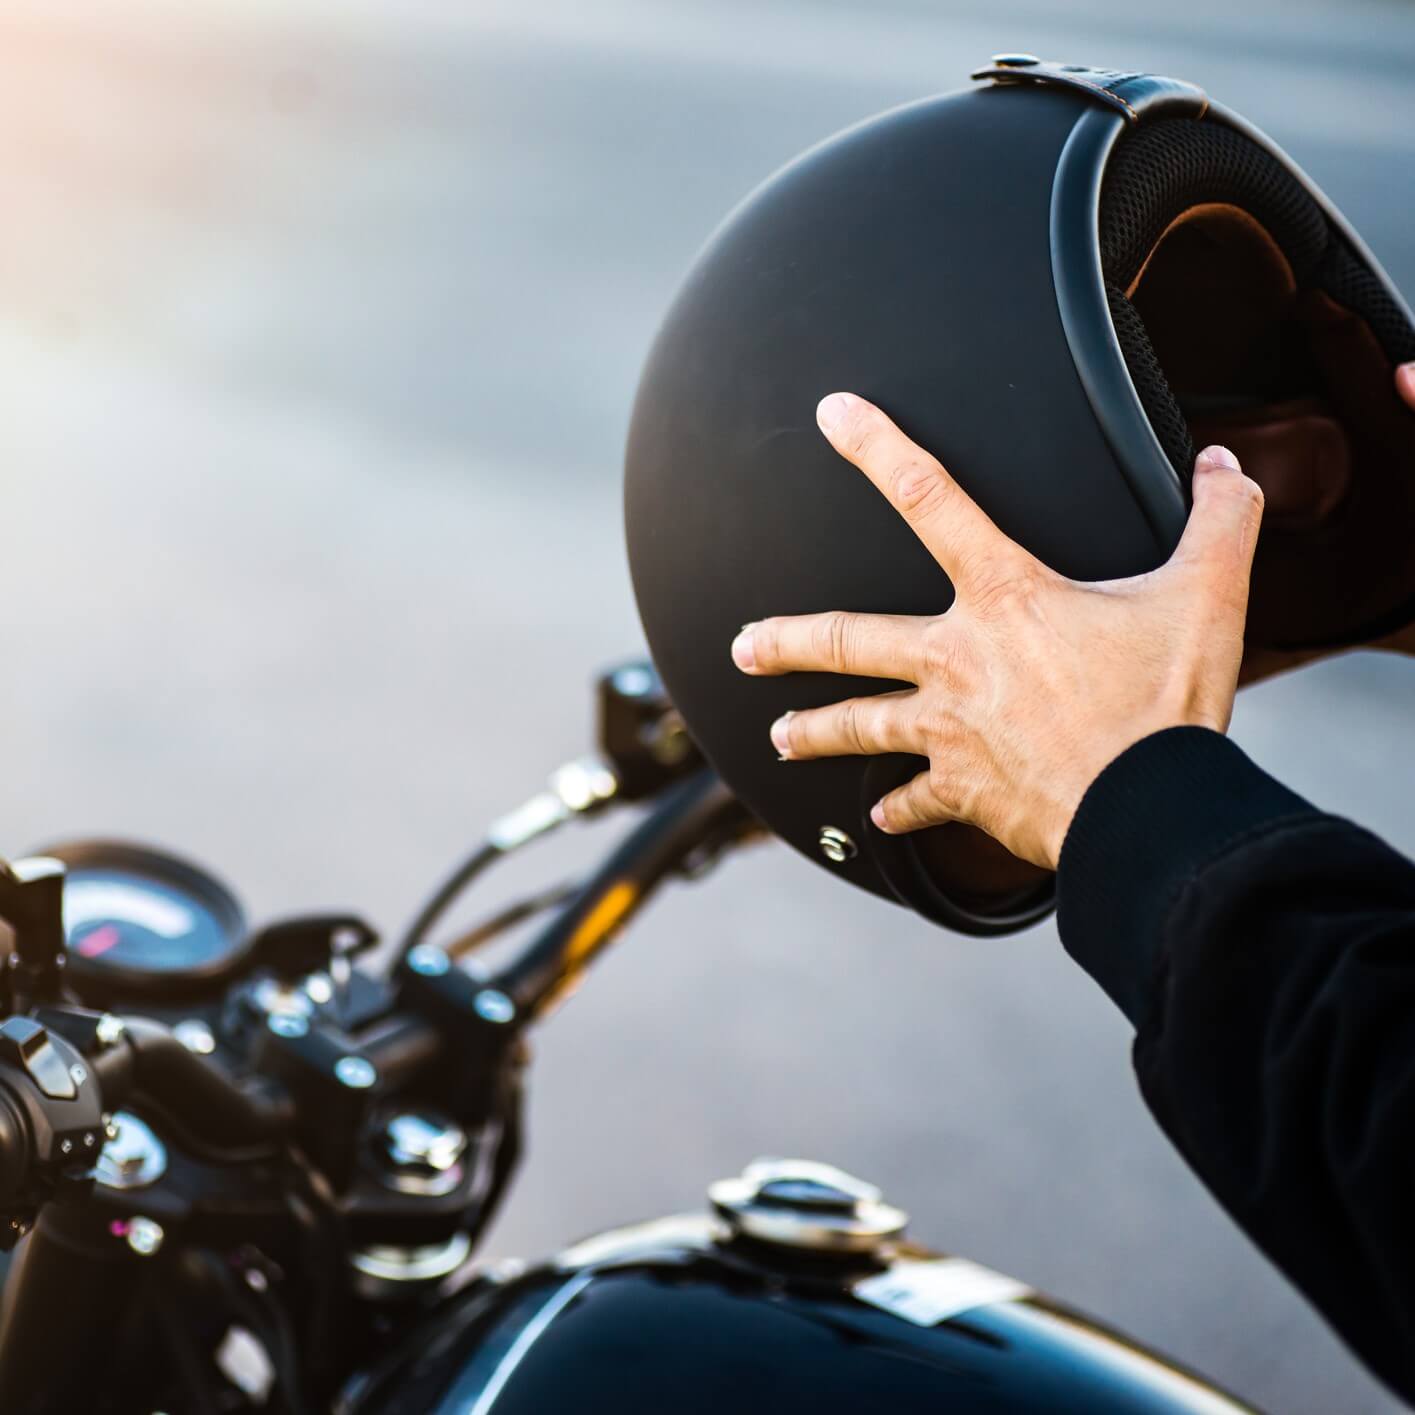 Pennsylvania Dmv Motorcycle Helmet Law | Reviewmotors.co